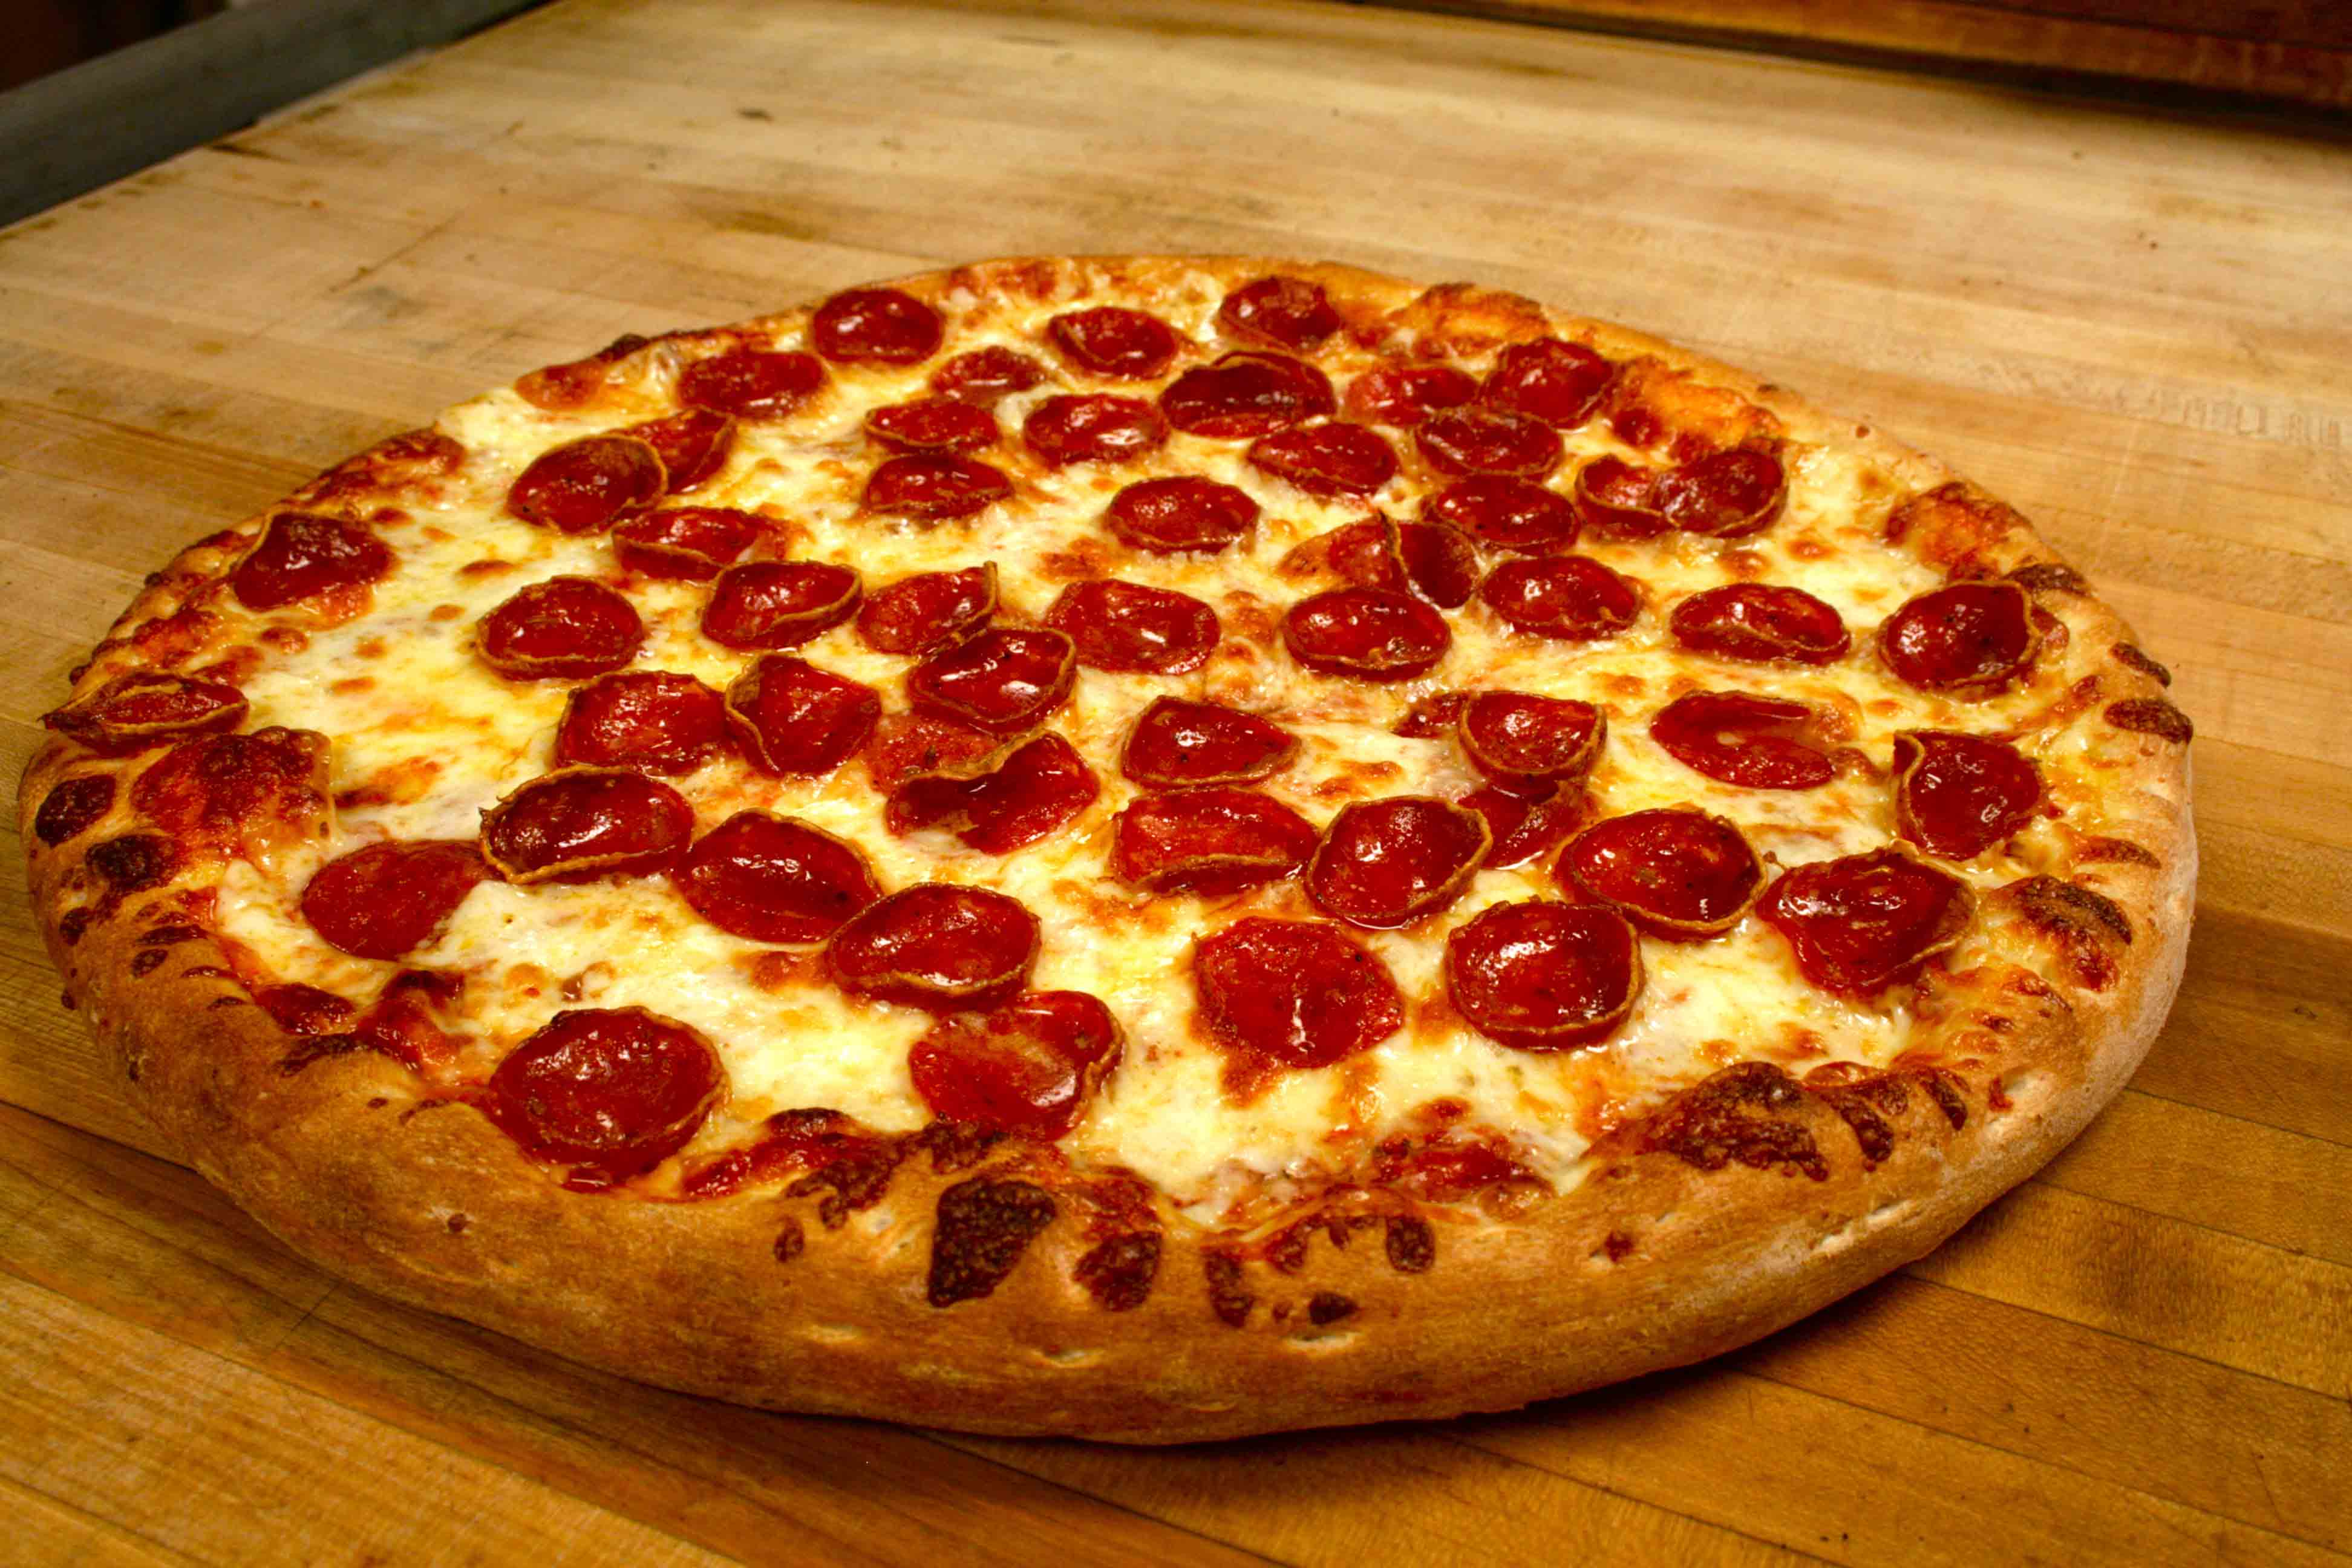 Pizza reaby. Пицца пепперони. Пицца с гранатом. Огромная пицца пепперони. Американская пицца пепперони.